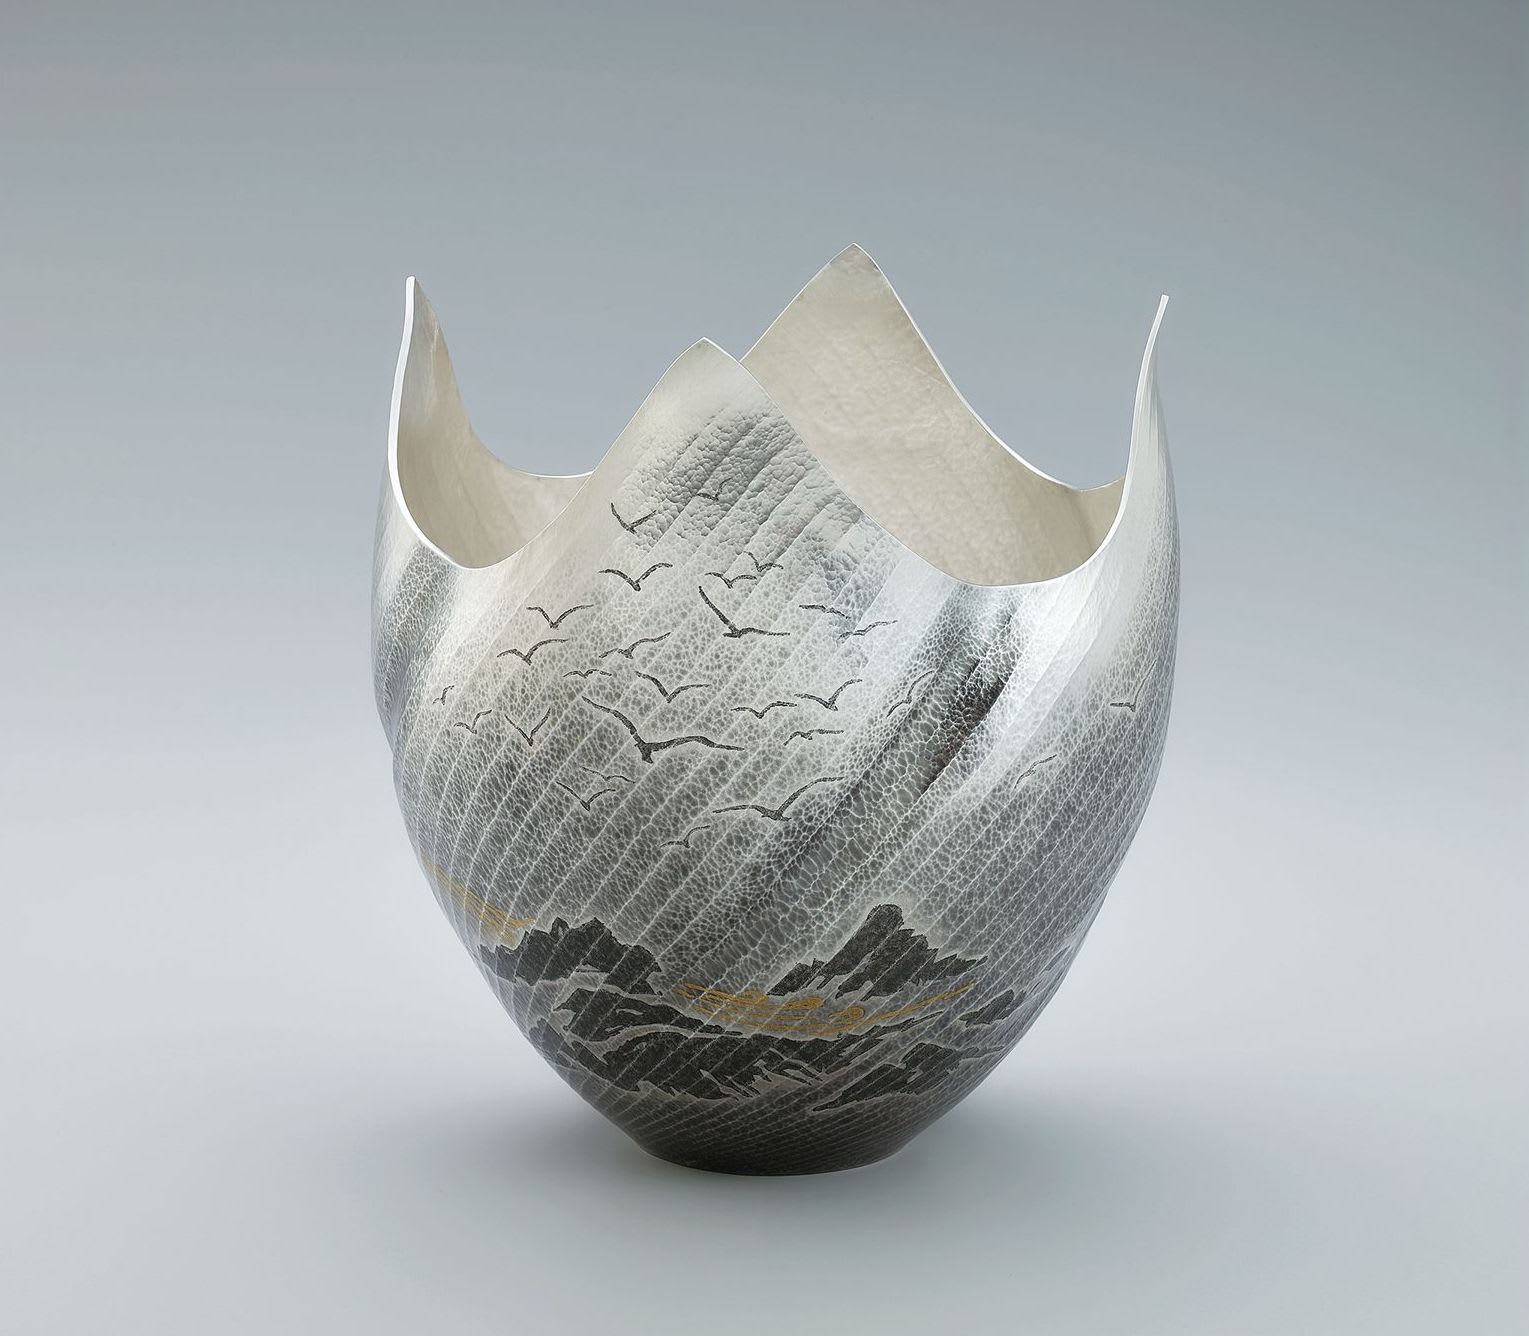 Silver Vase Araiso (Rough Shore), 2020 Hammered silver with nunome zogan (textile imprint inlay) decoration in lead and gold h. 10 5/8 x w. 10 x d. 10 in. (27.1 x 25.3 x 25.3 cm)